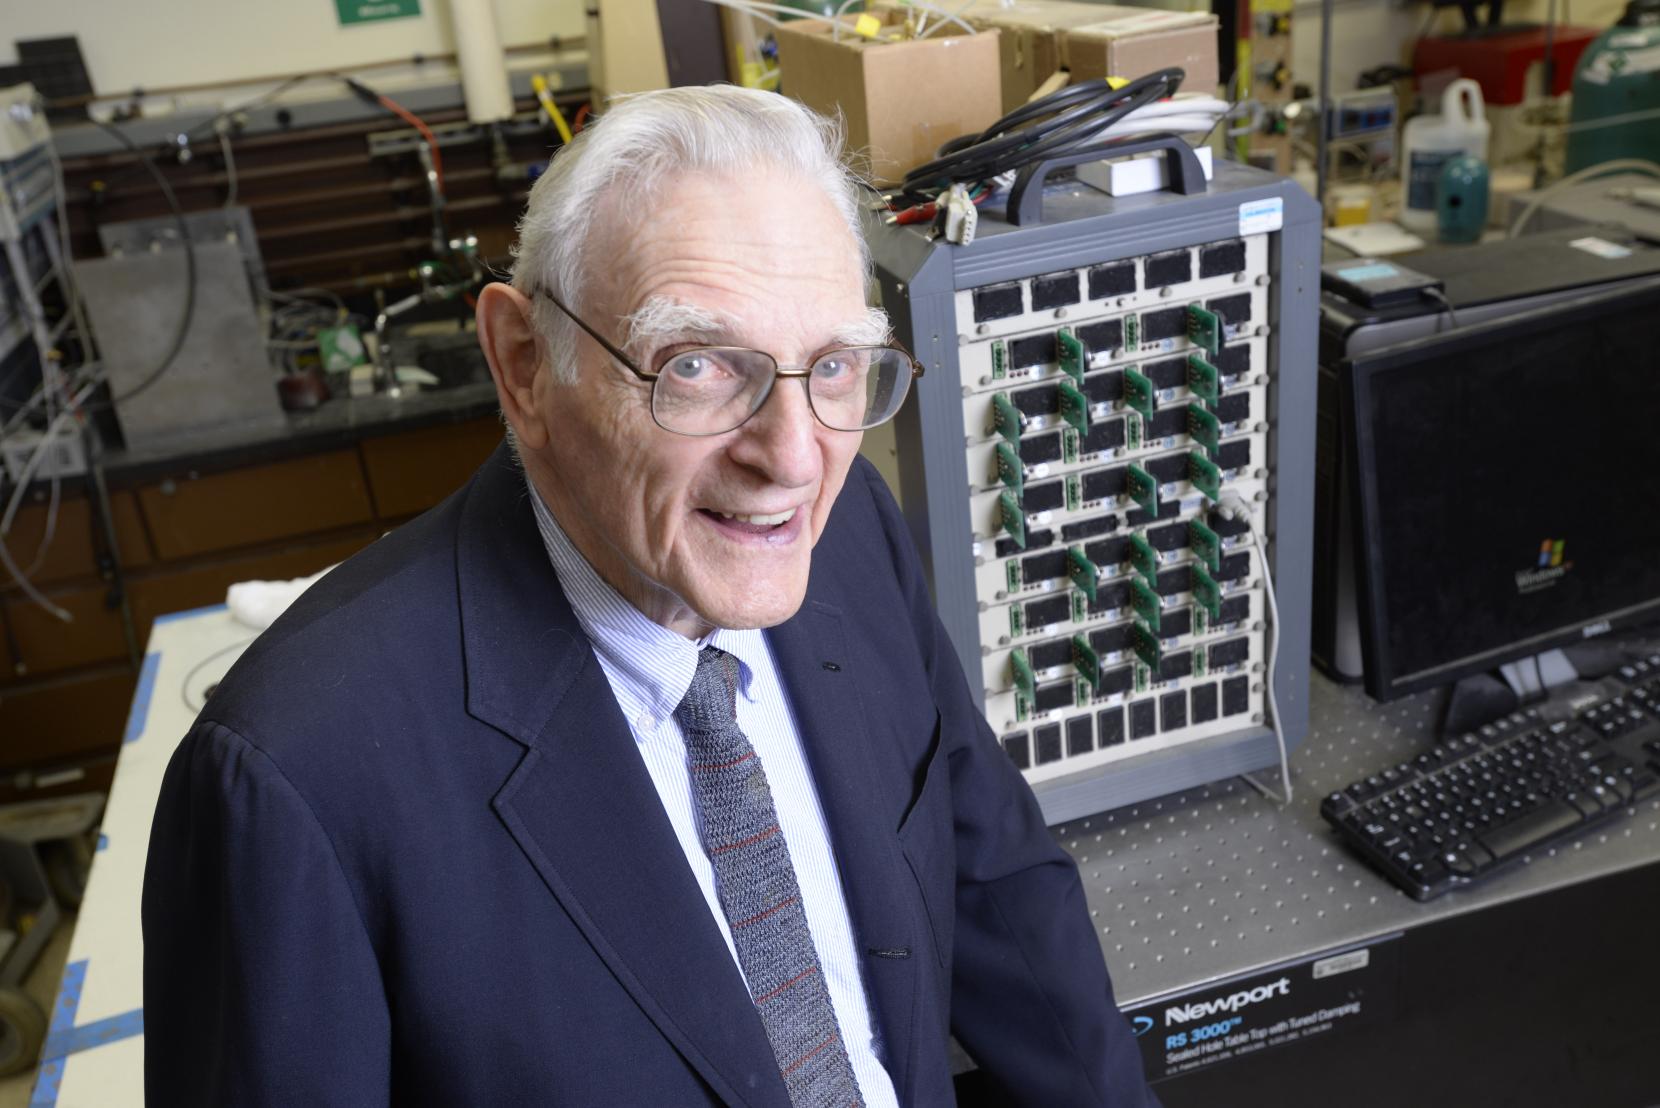 John Goodenough Lithium-ion Battery breakthrough, will it help EV battery tech?